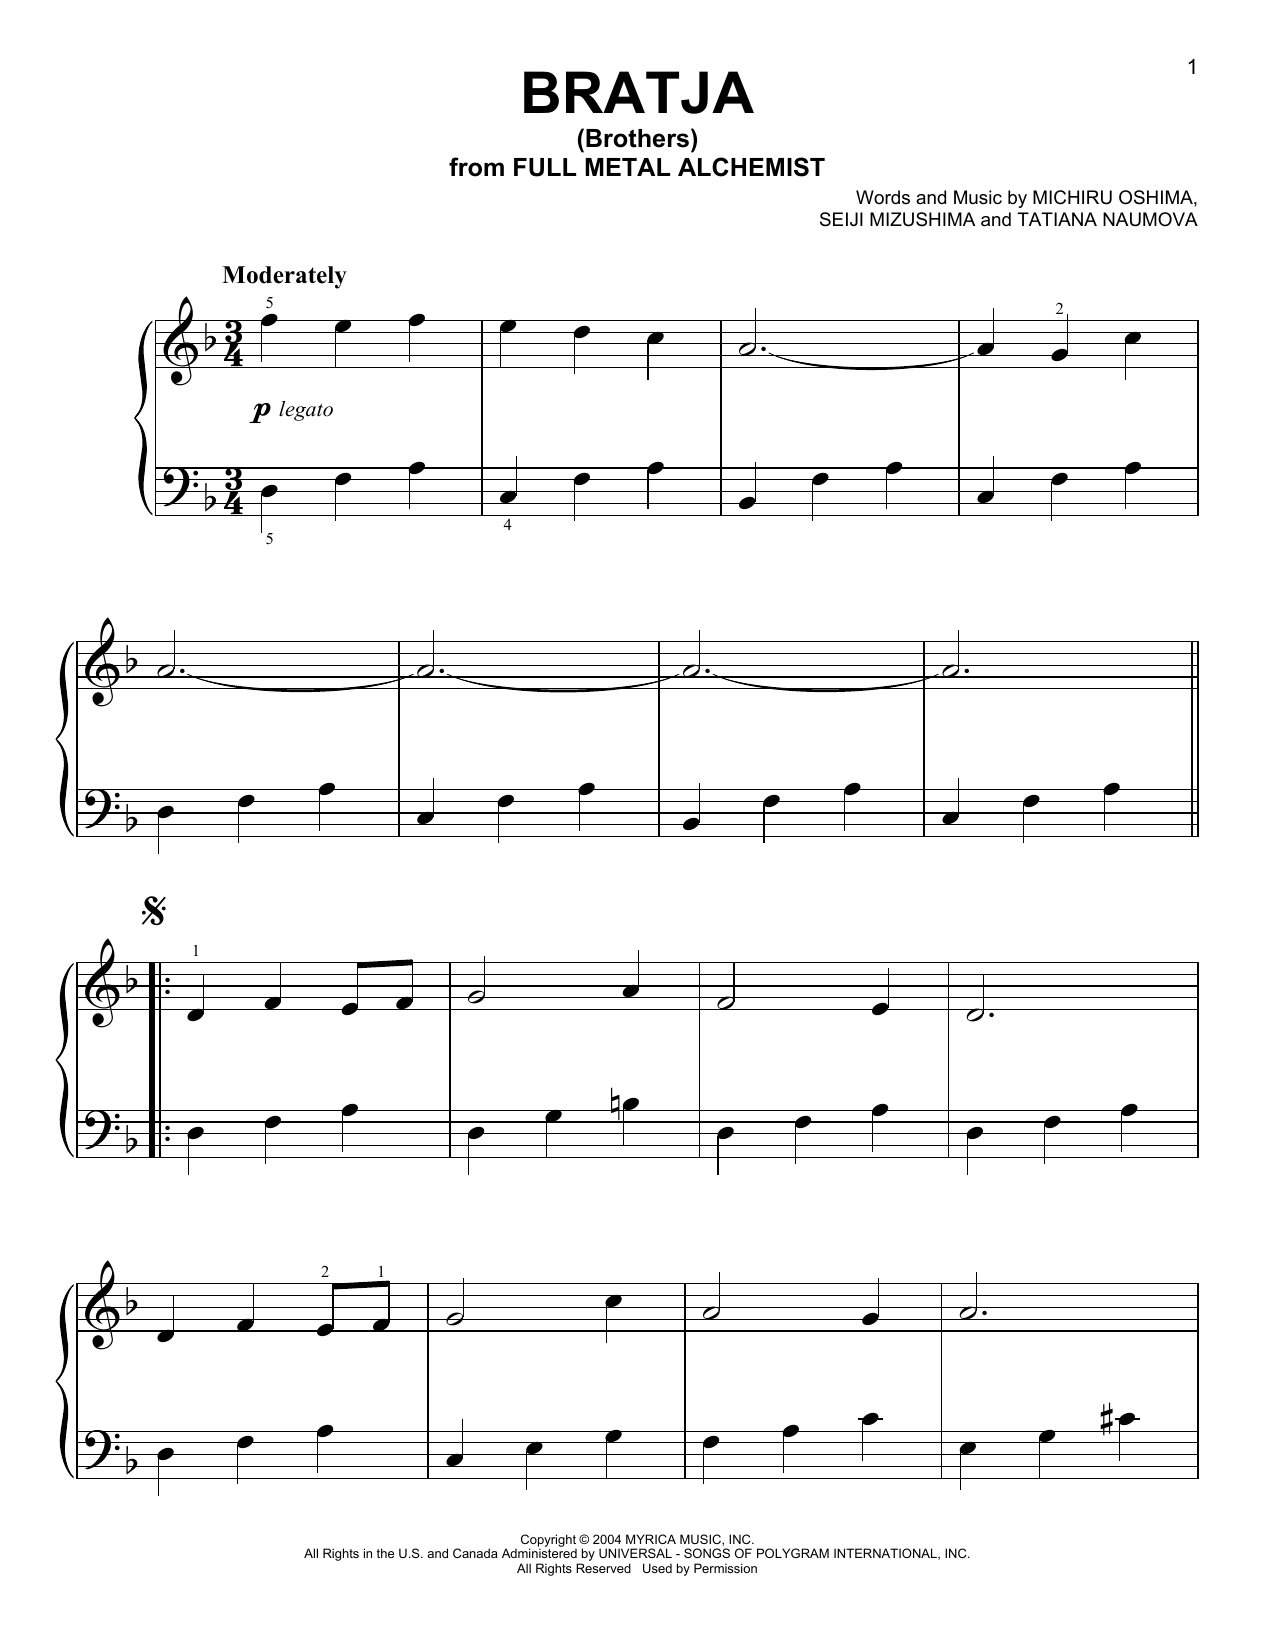 Michiru Oshima, Seiji Mizushima & Tatiana Naumova Bratja (Brothers) (from Fullmetal Alchemist) Sheet Music Notes & Chords for Easy Piano - Download or Print PDF